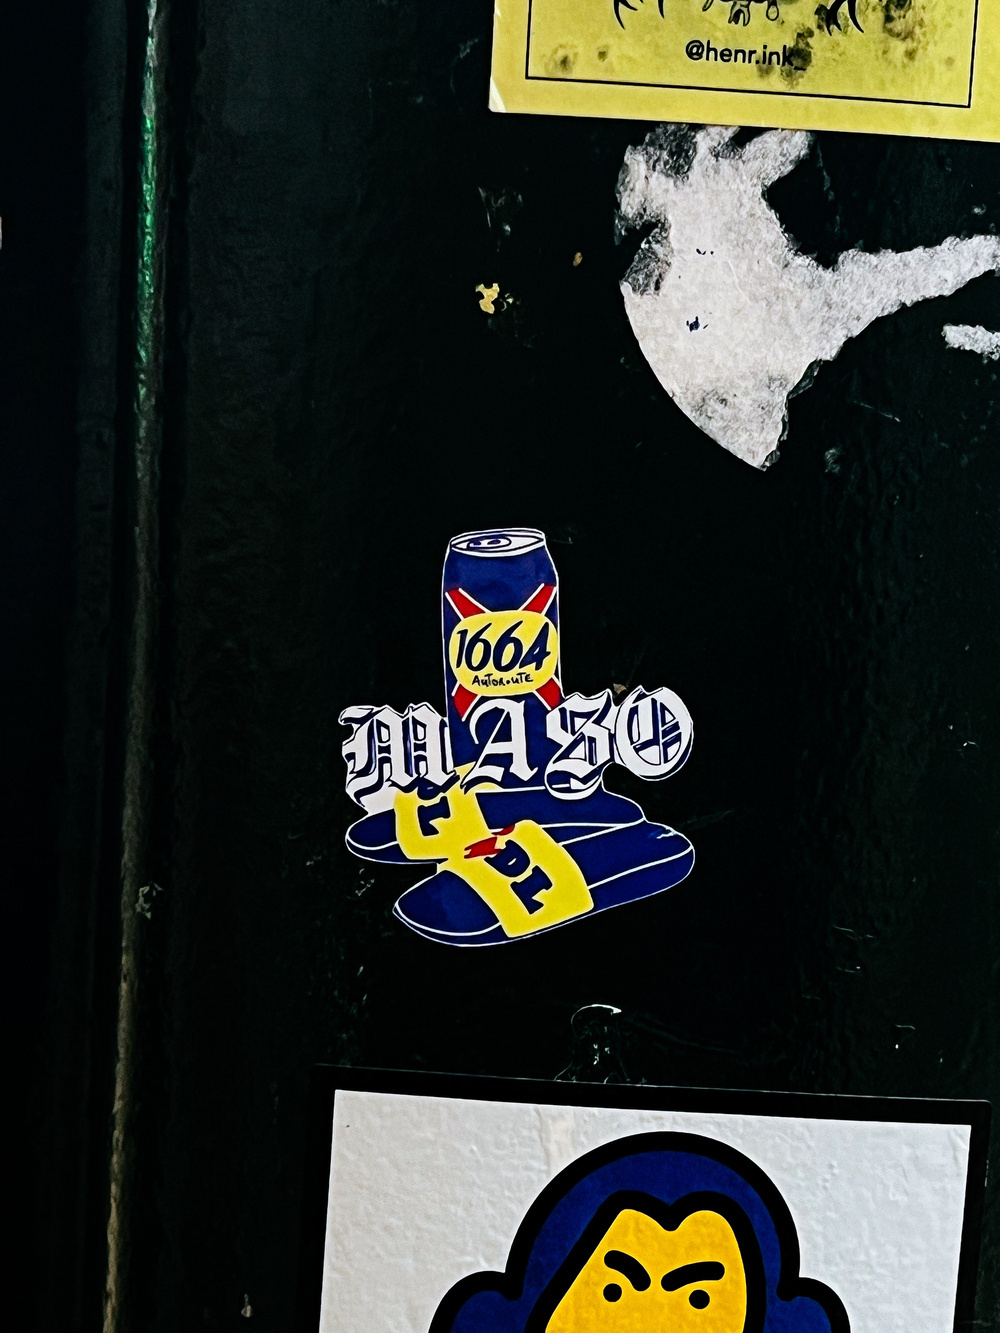 Lidl themed sticker. Flip flops, 1664 beer can. 